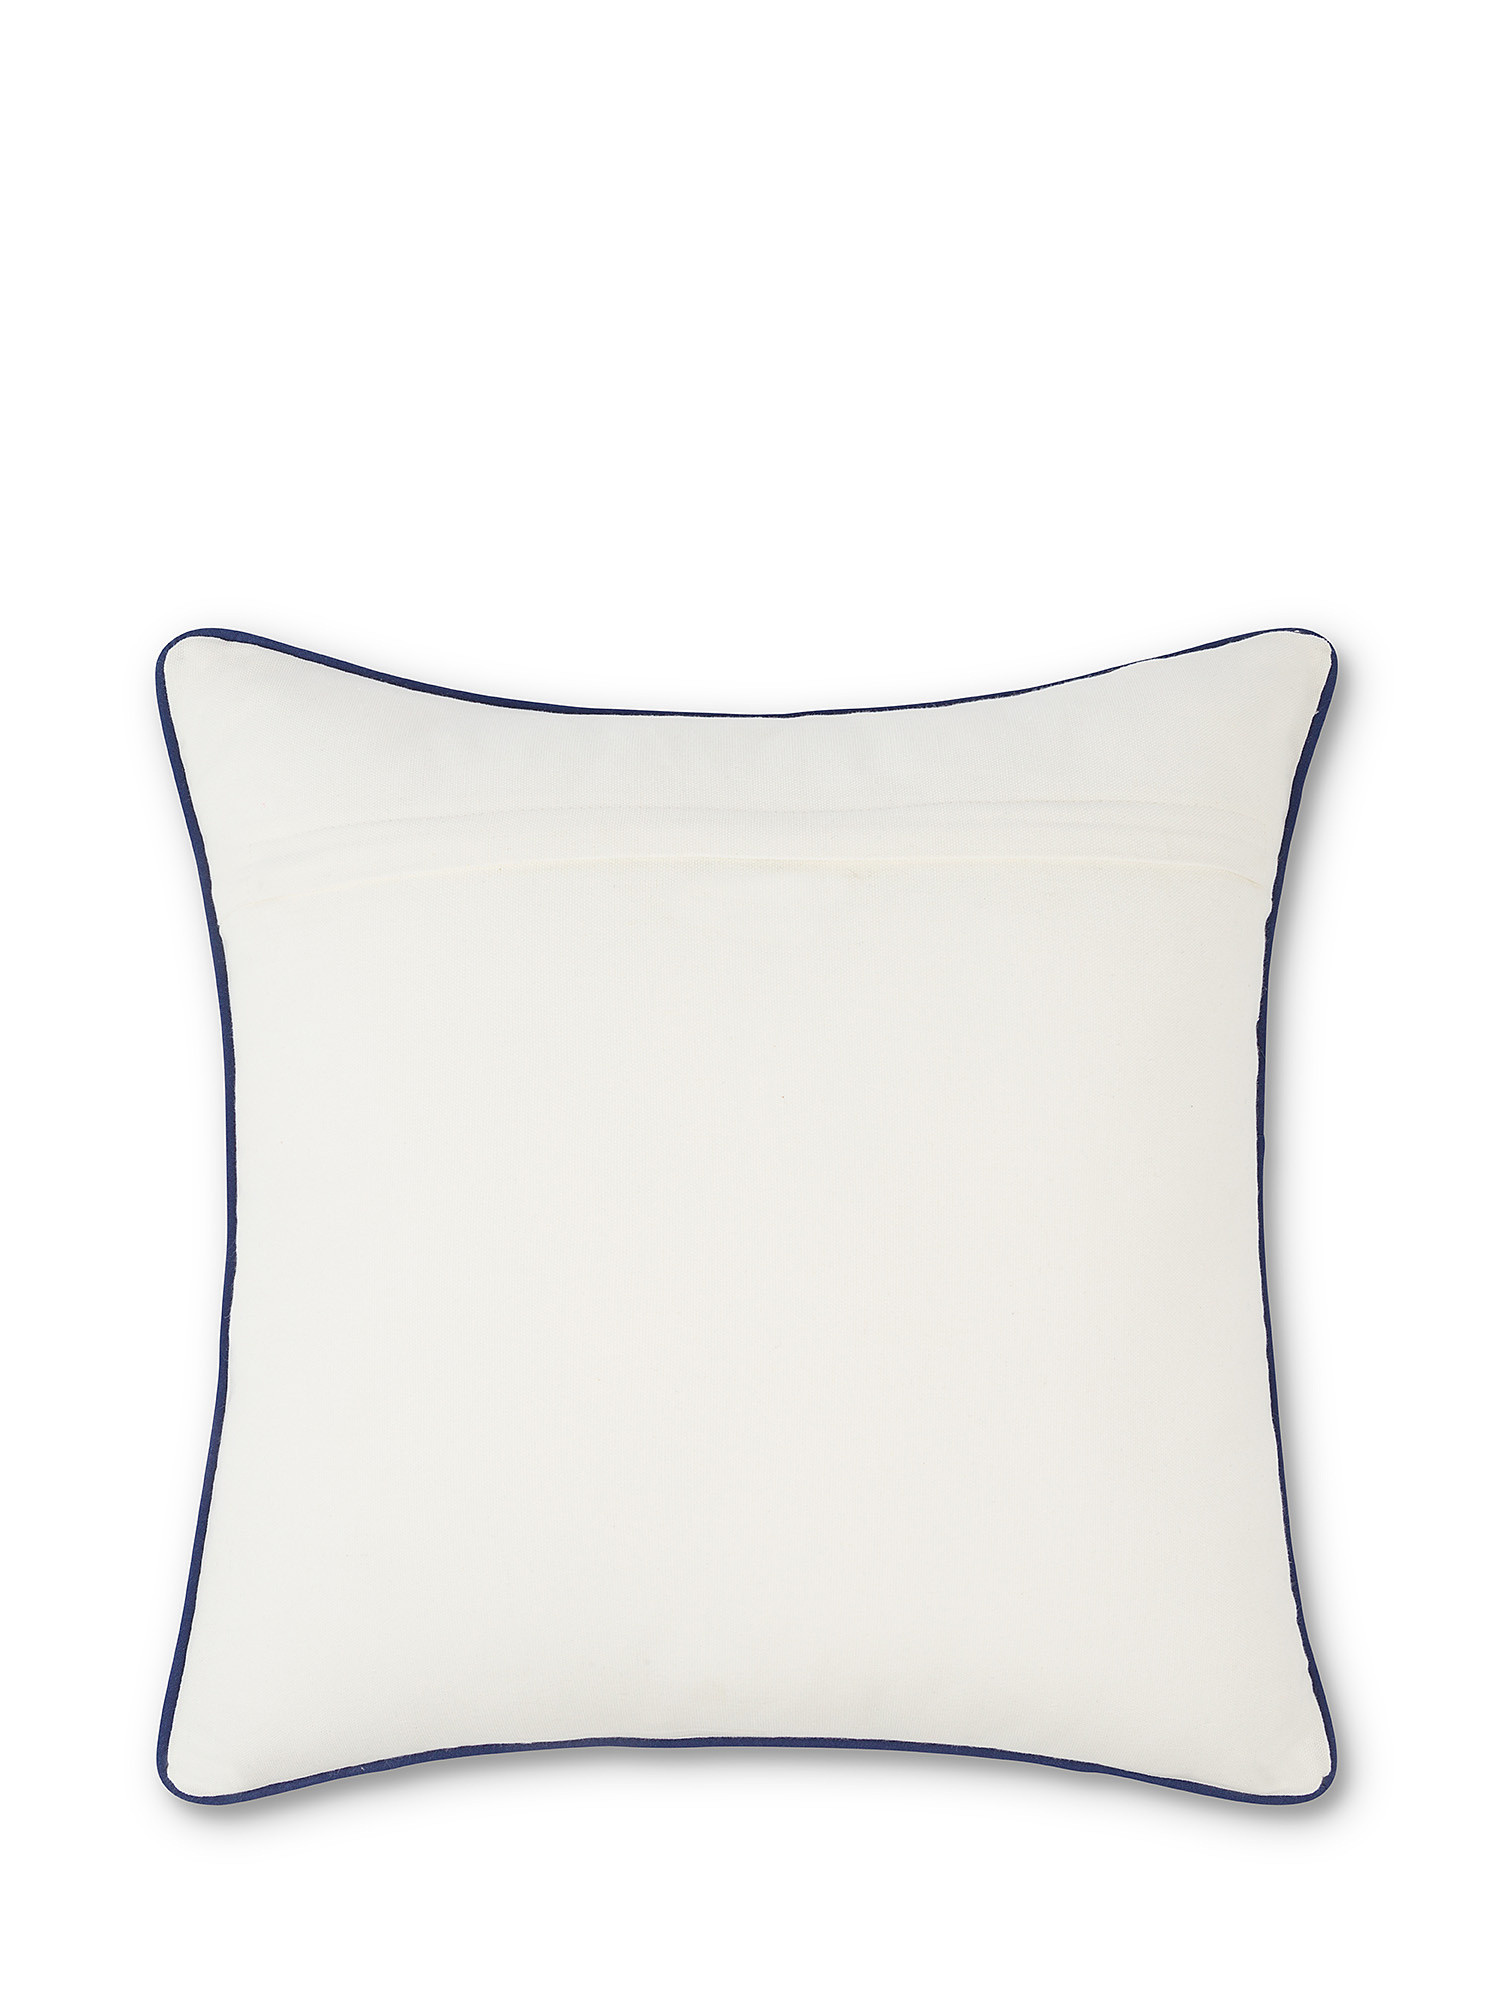 Marine embroidery cotton cushion 45x45cm, Light Blue, large image number 1